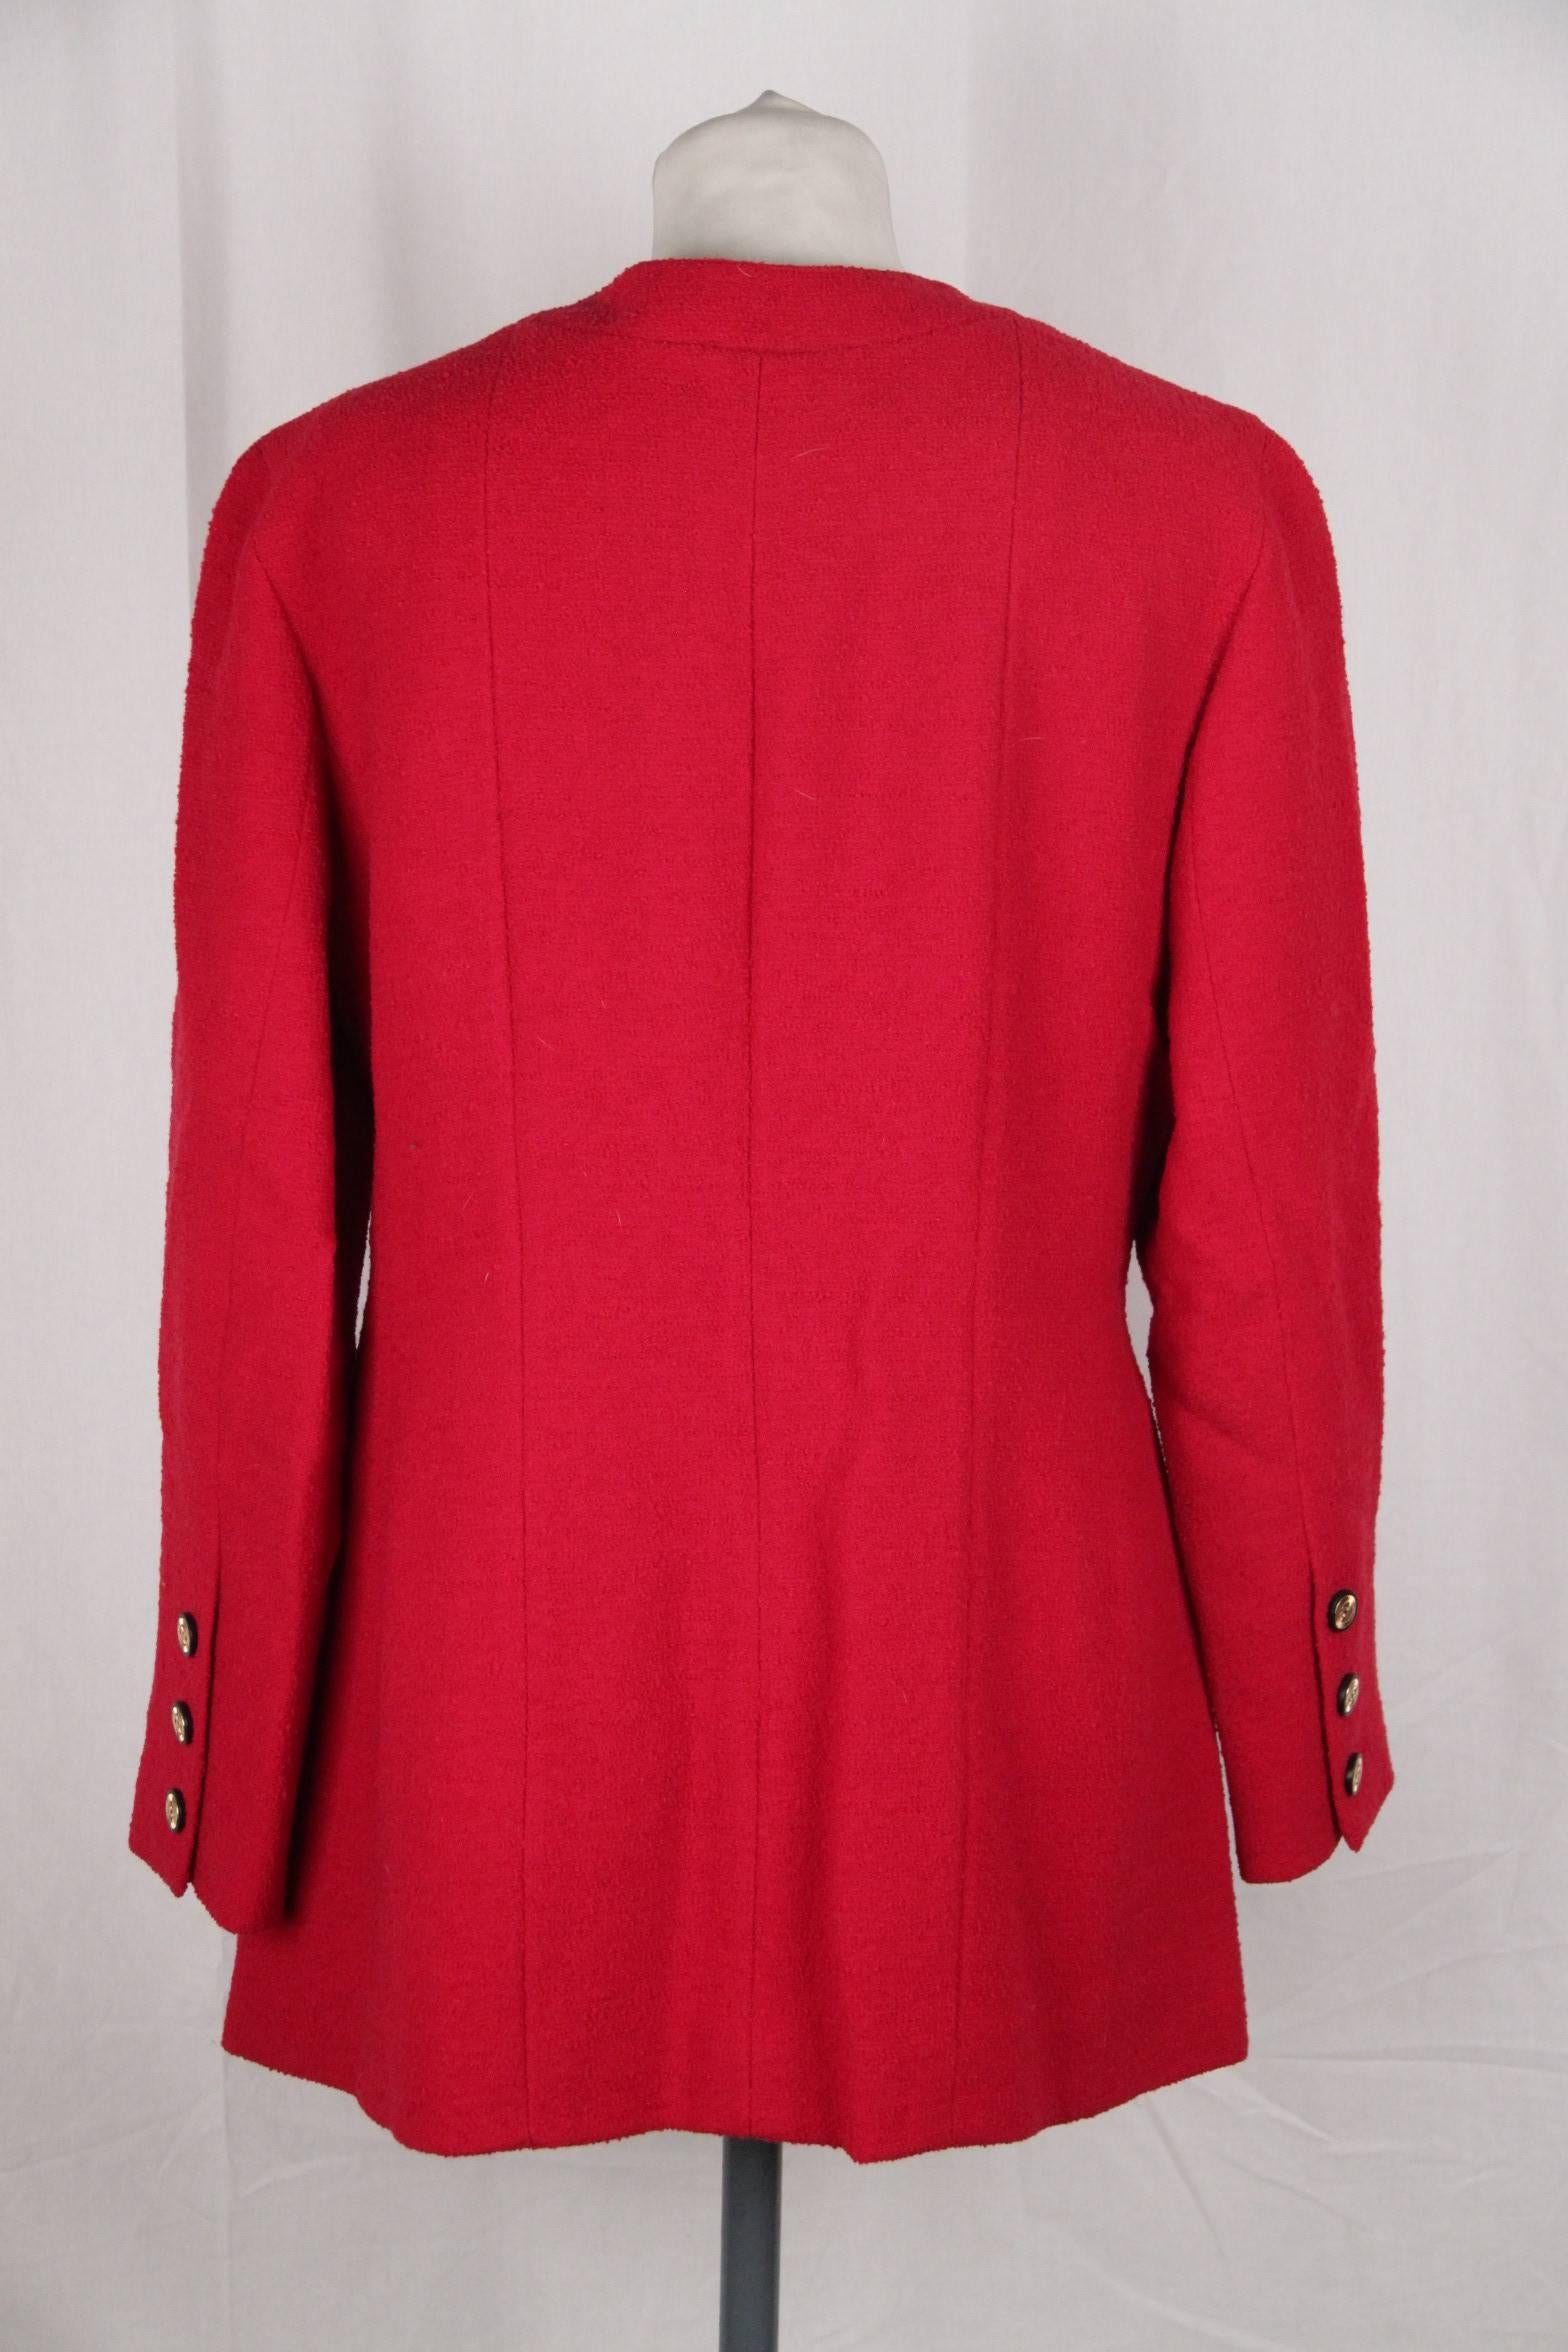 Chanel Boutique Vintage Red Collarless Blazer Jacket 2